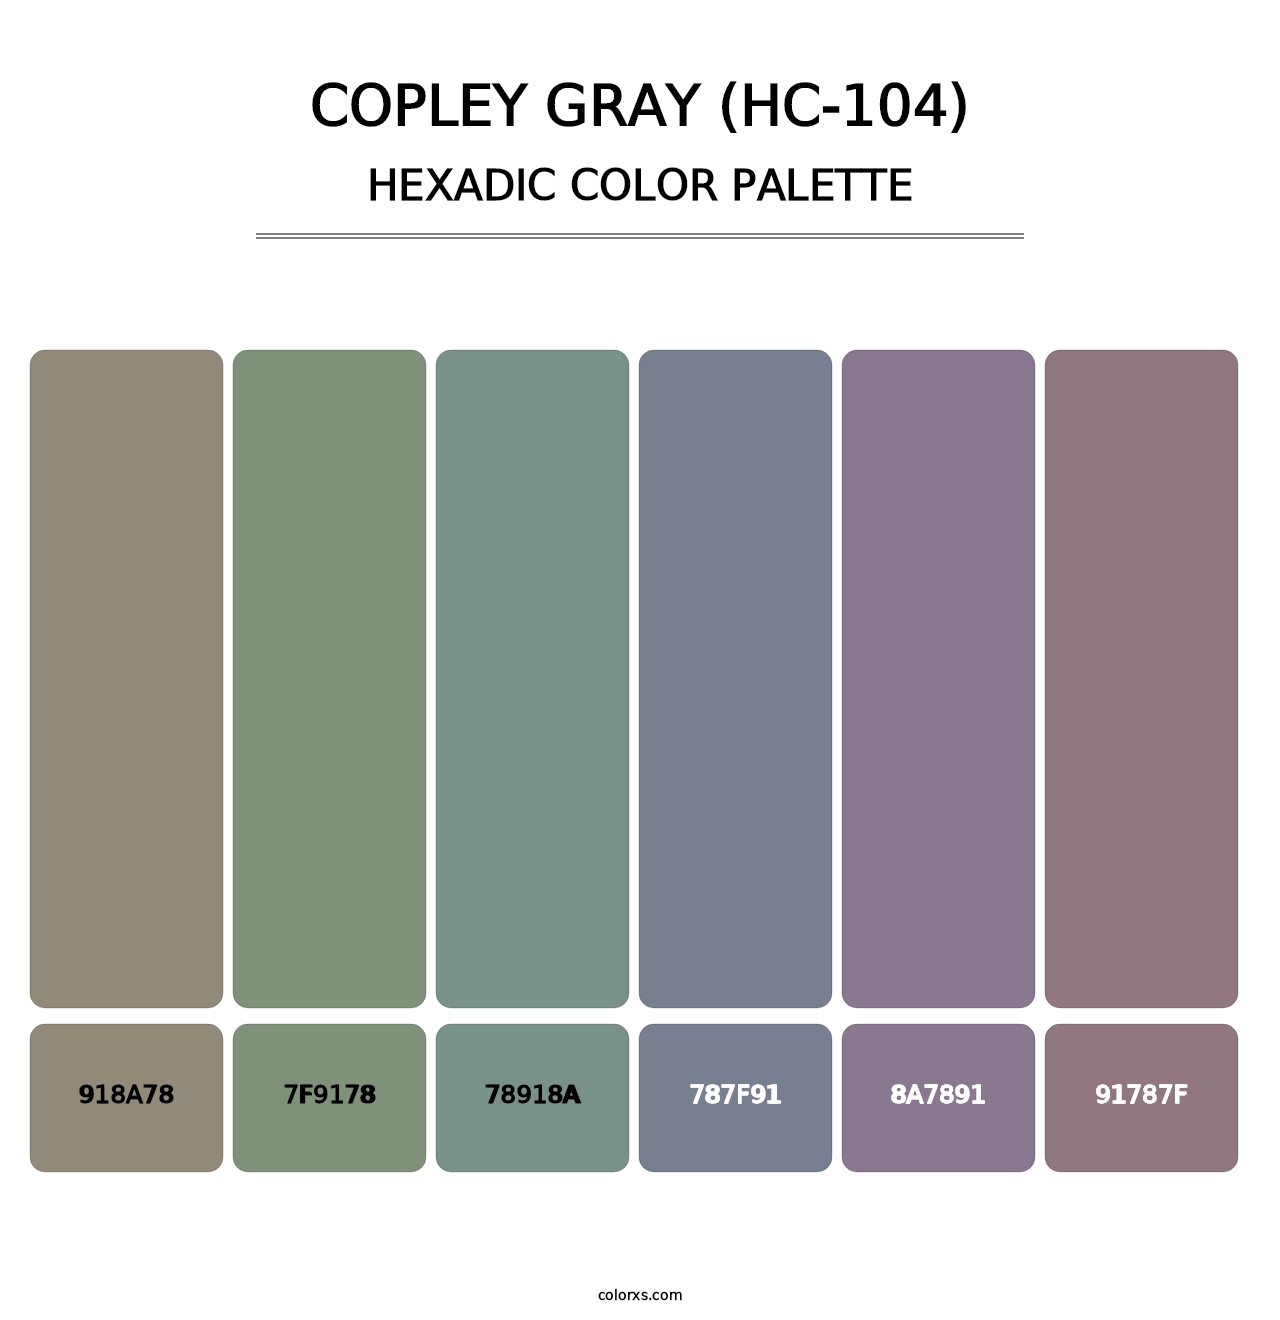 Copley Gray (HC-104) - Hexadic Color Palette